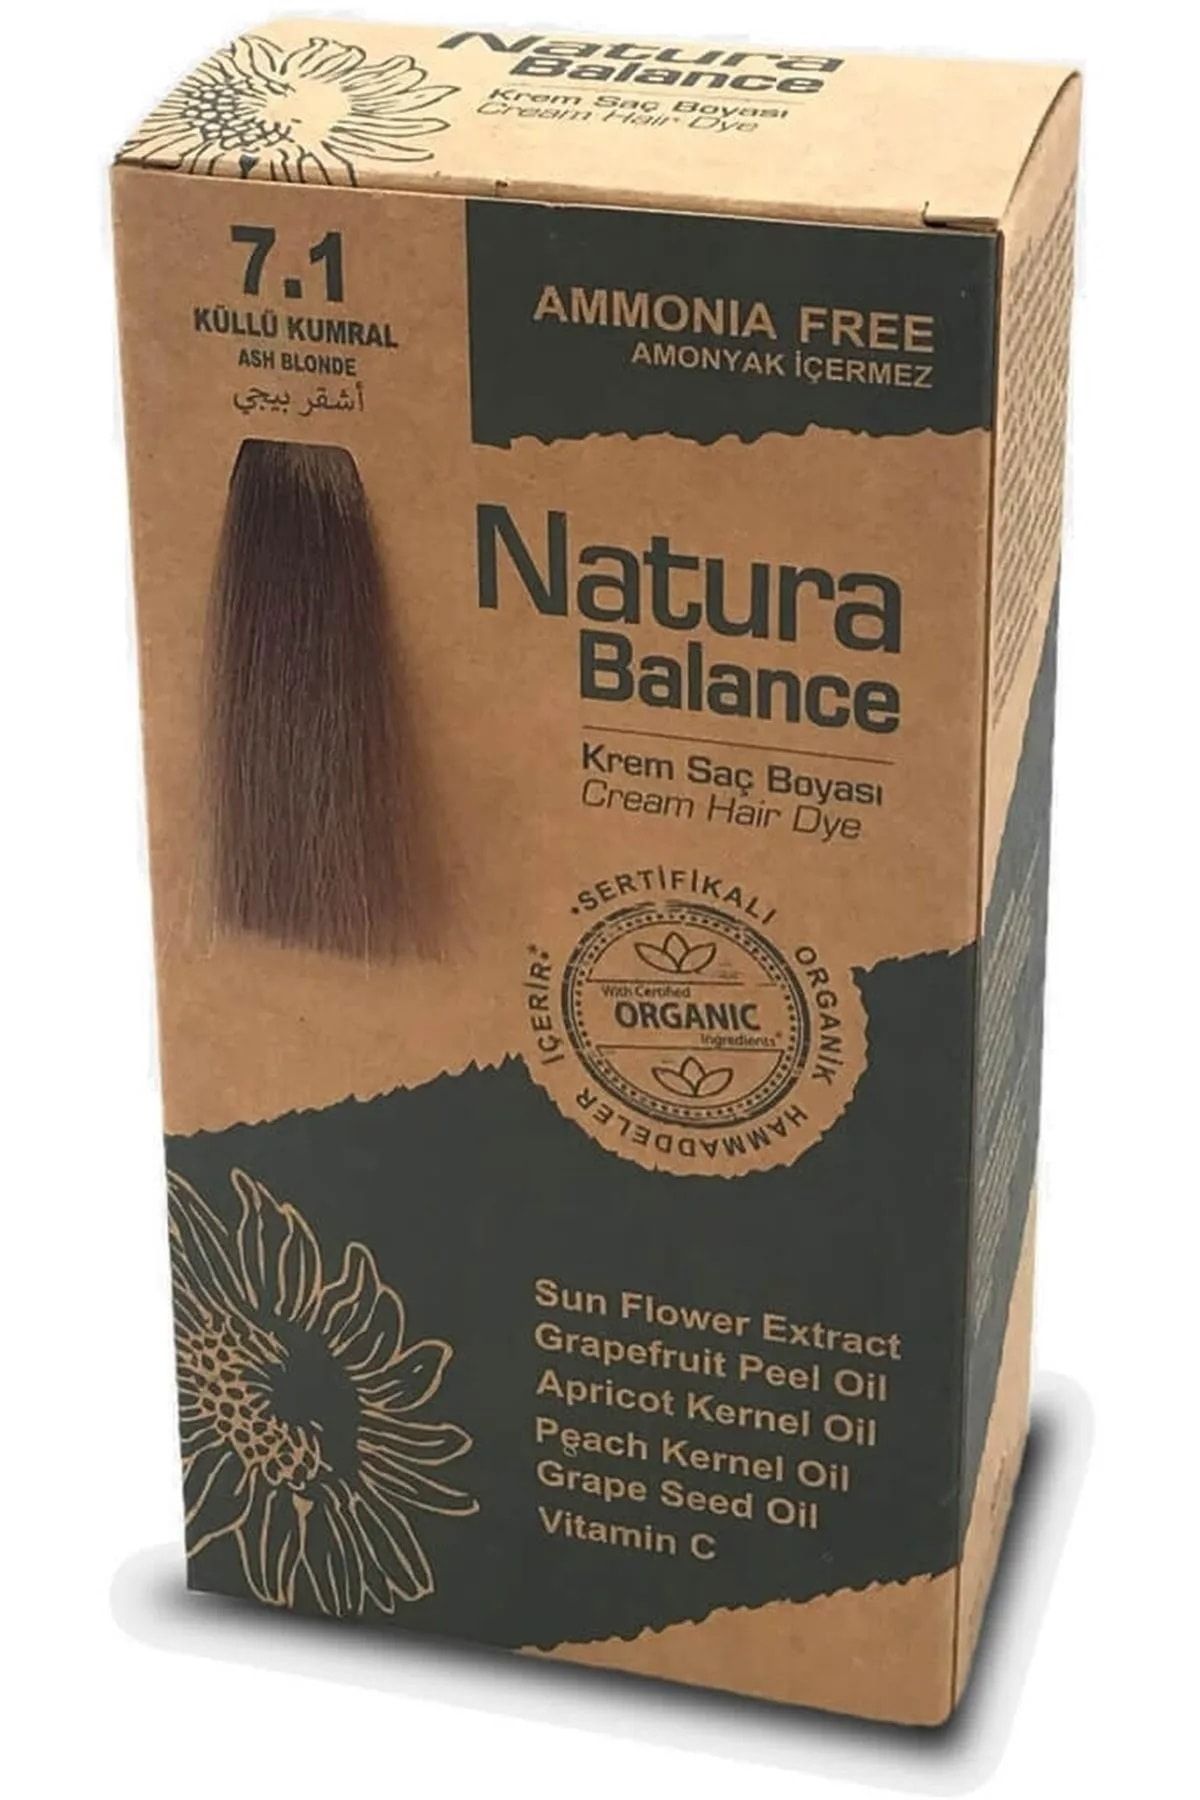 NATURABALANCE Natura Balance 7.1 Küllü Kumral Organik Krem Saç Boyası